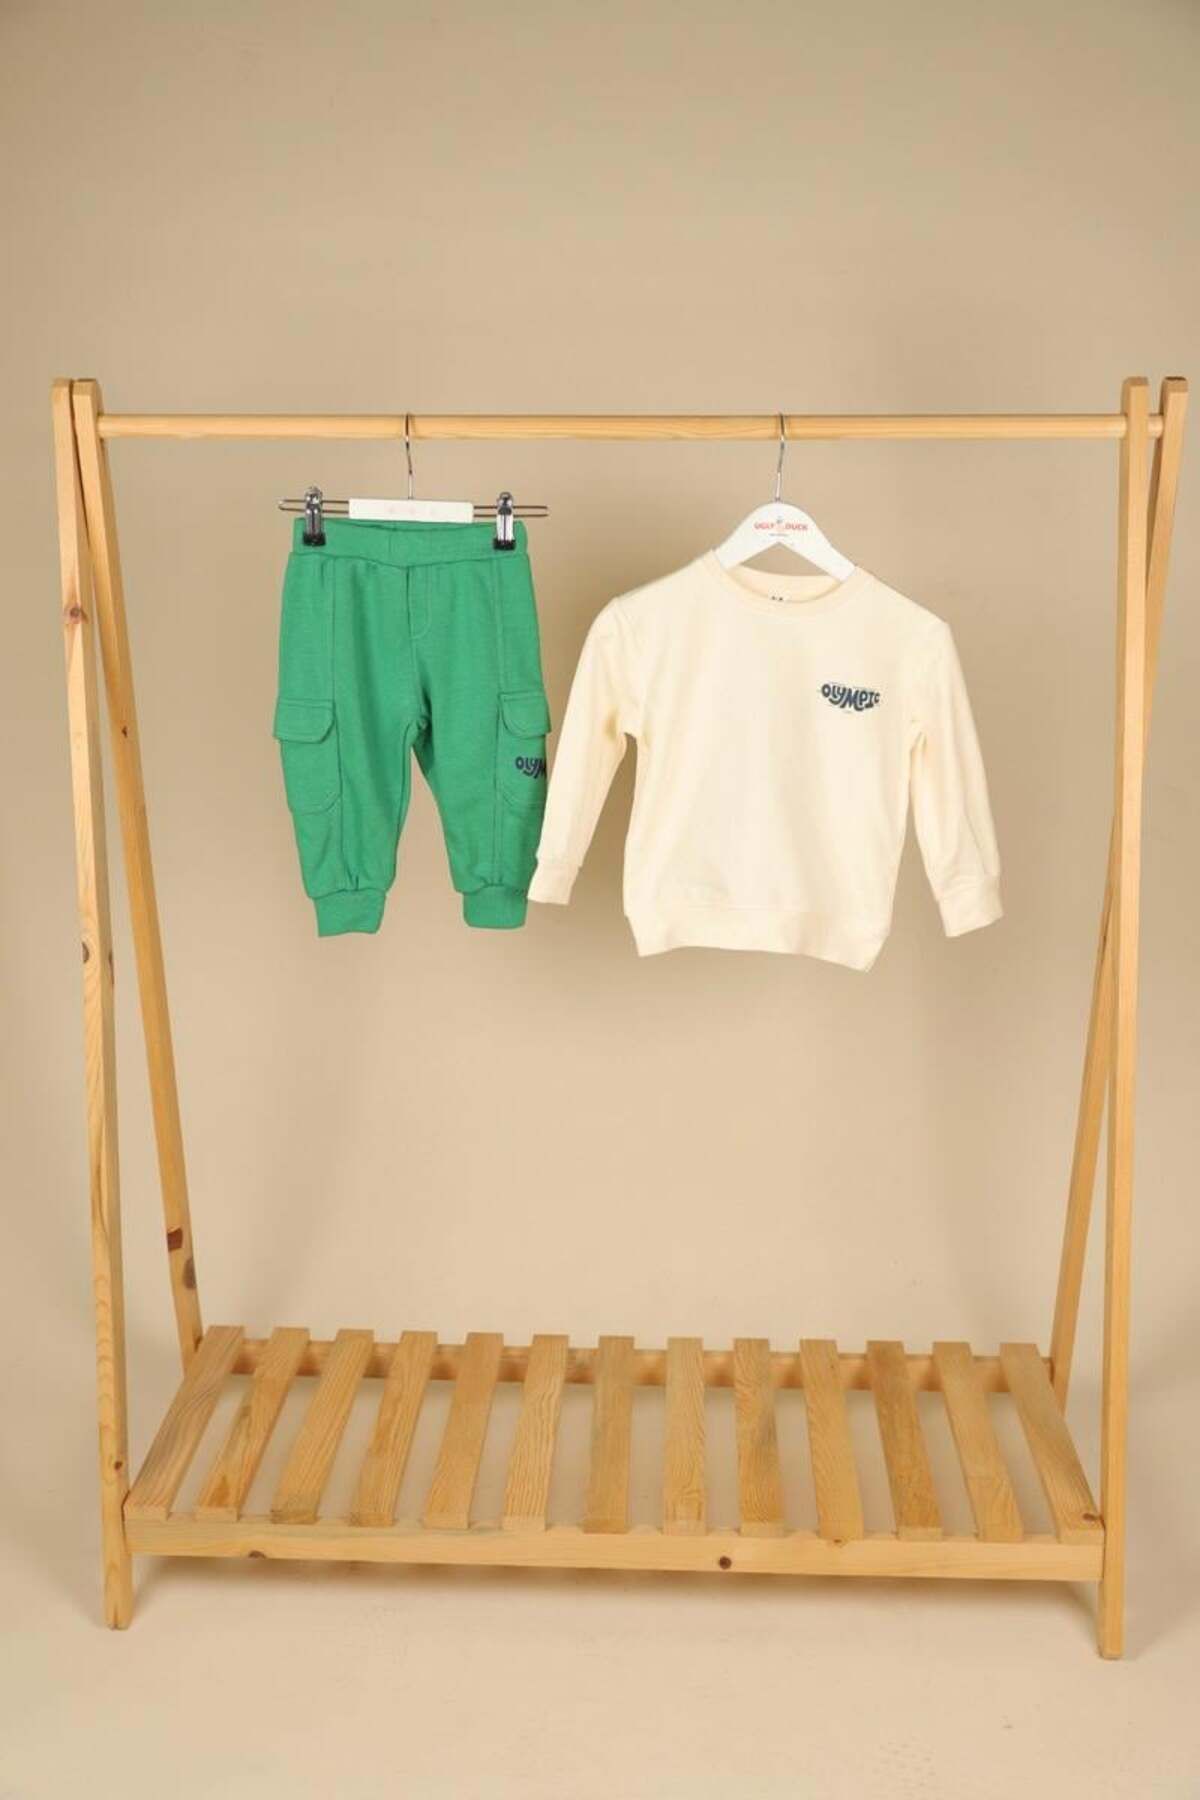 NK 09-36 Ay Erkek Bebek Ekru-Yeşil Renk Olympic Sweat Pantolon Takım